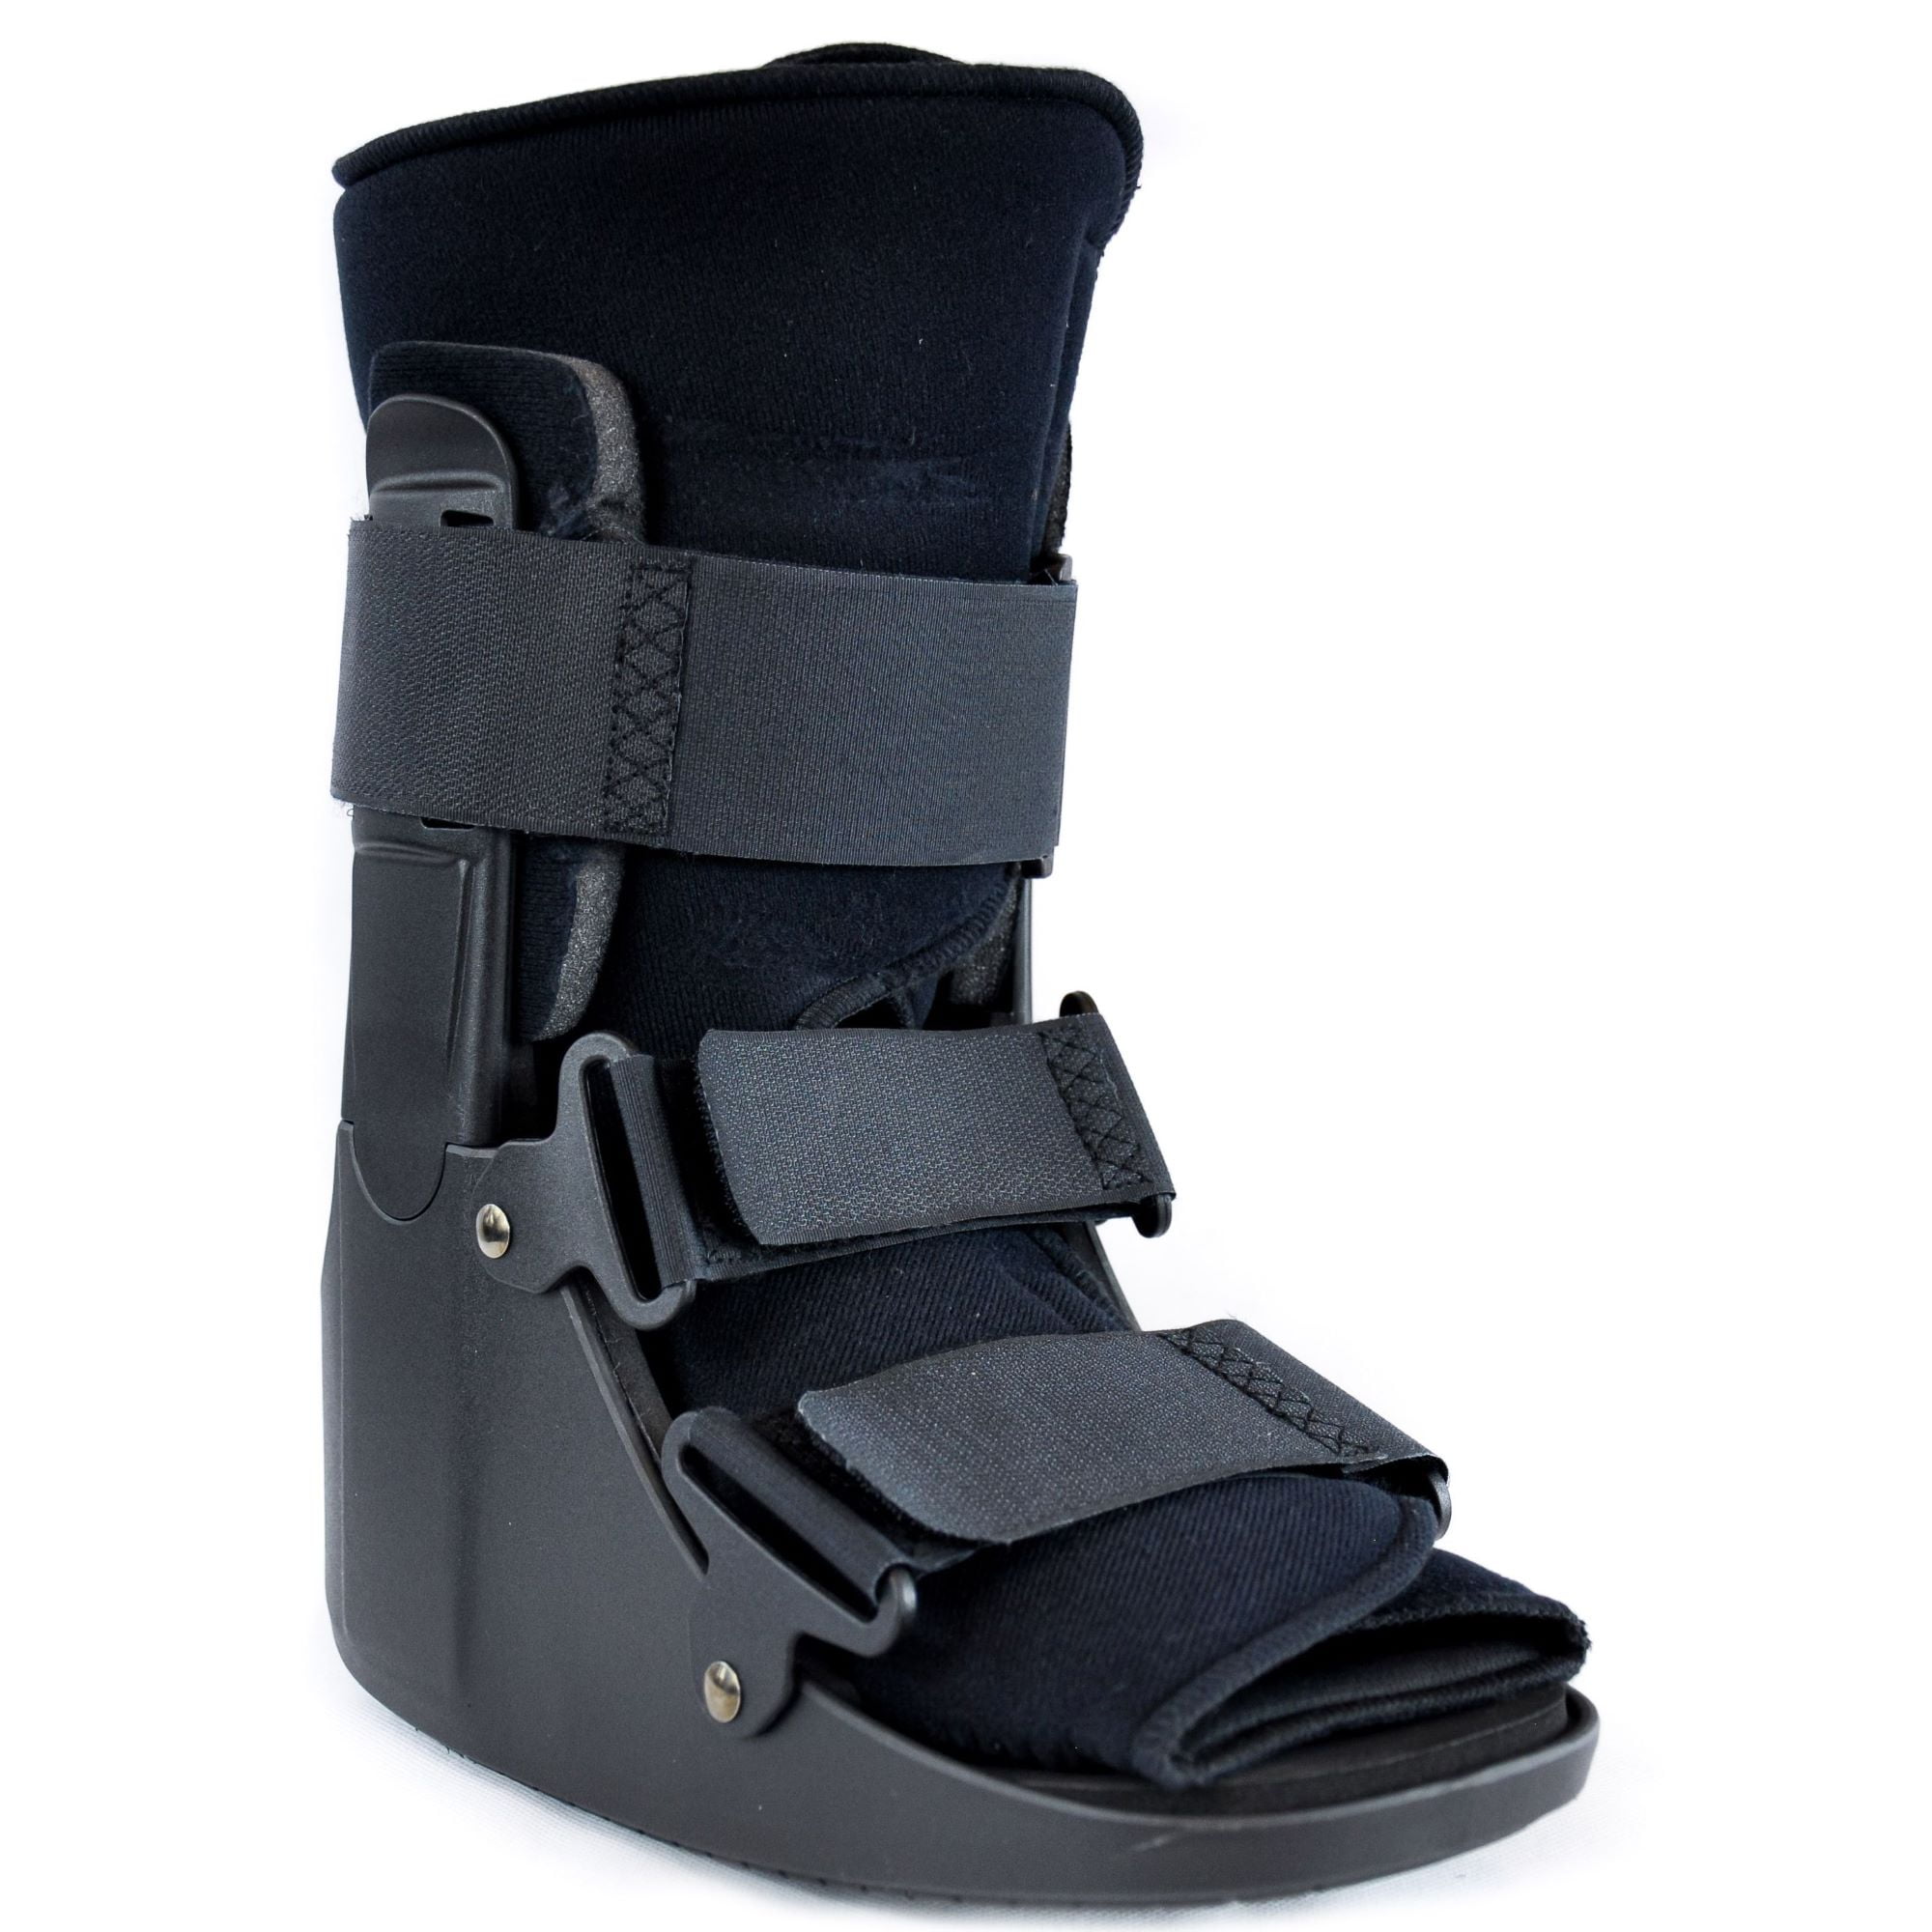 Cam Walker Fracture Boot Walk Cast Ankle Sprain L4386